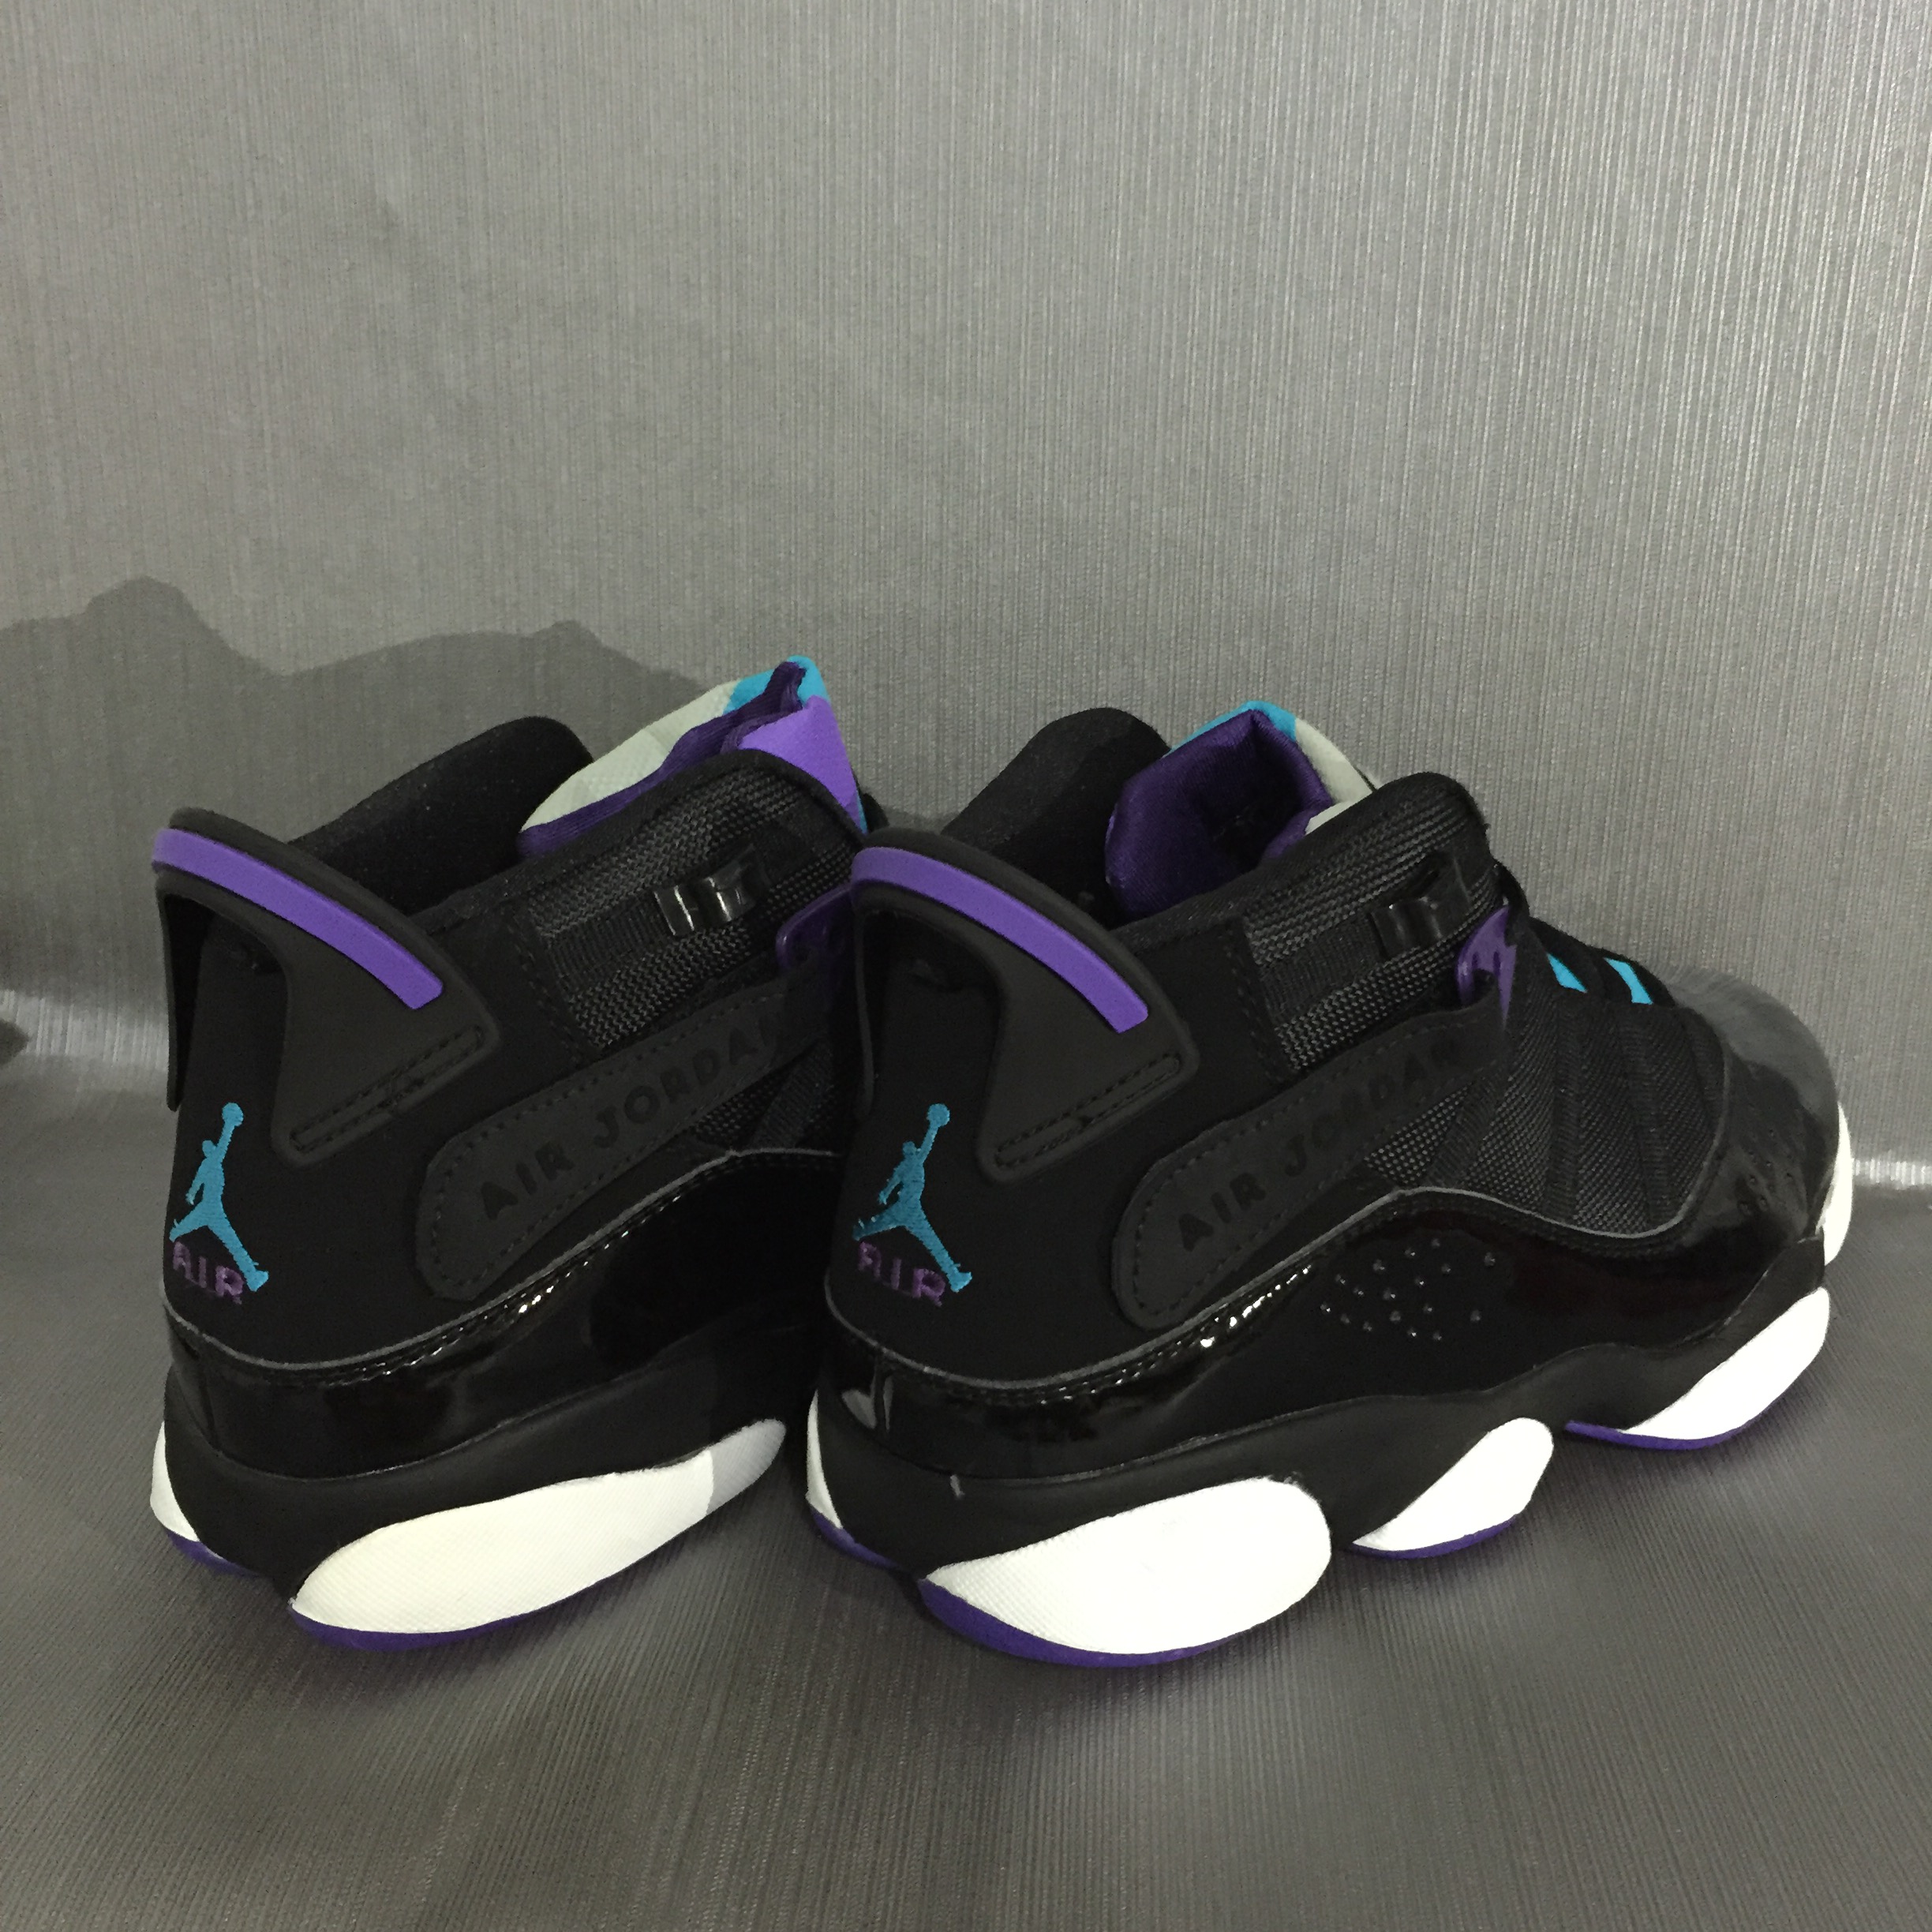 2017 Air Jordan 6 Rings Black Purple White Shoes